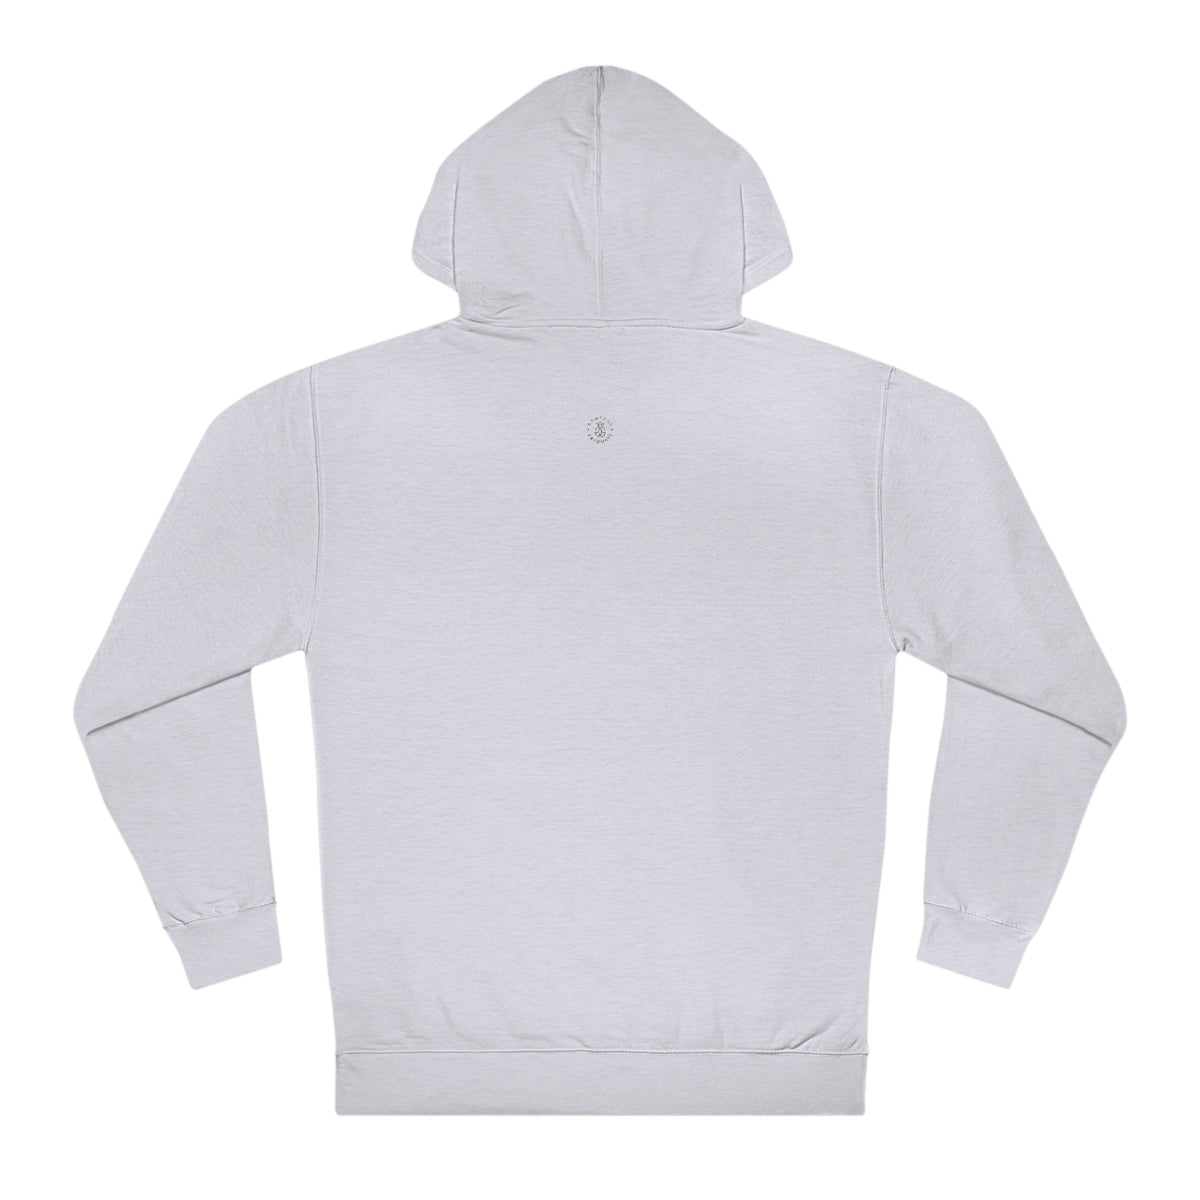 Wash State Hooded Sweatshirt - GG - ITC